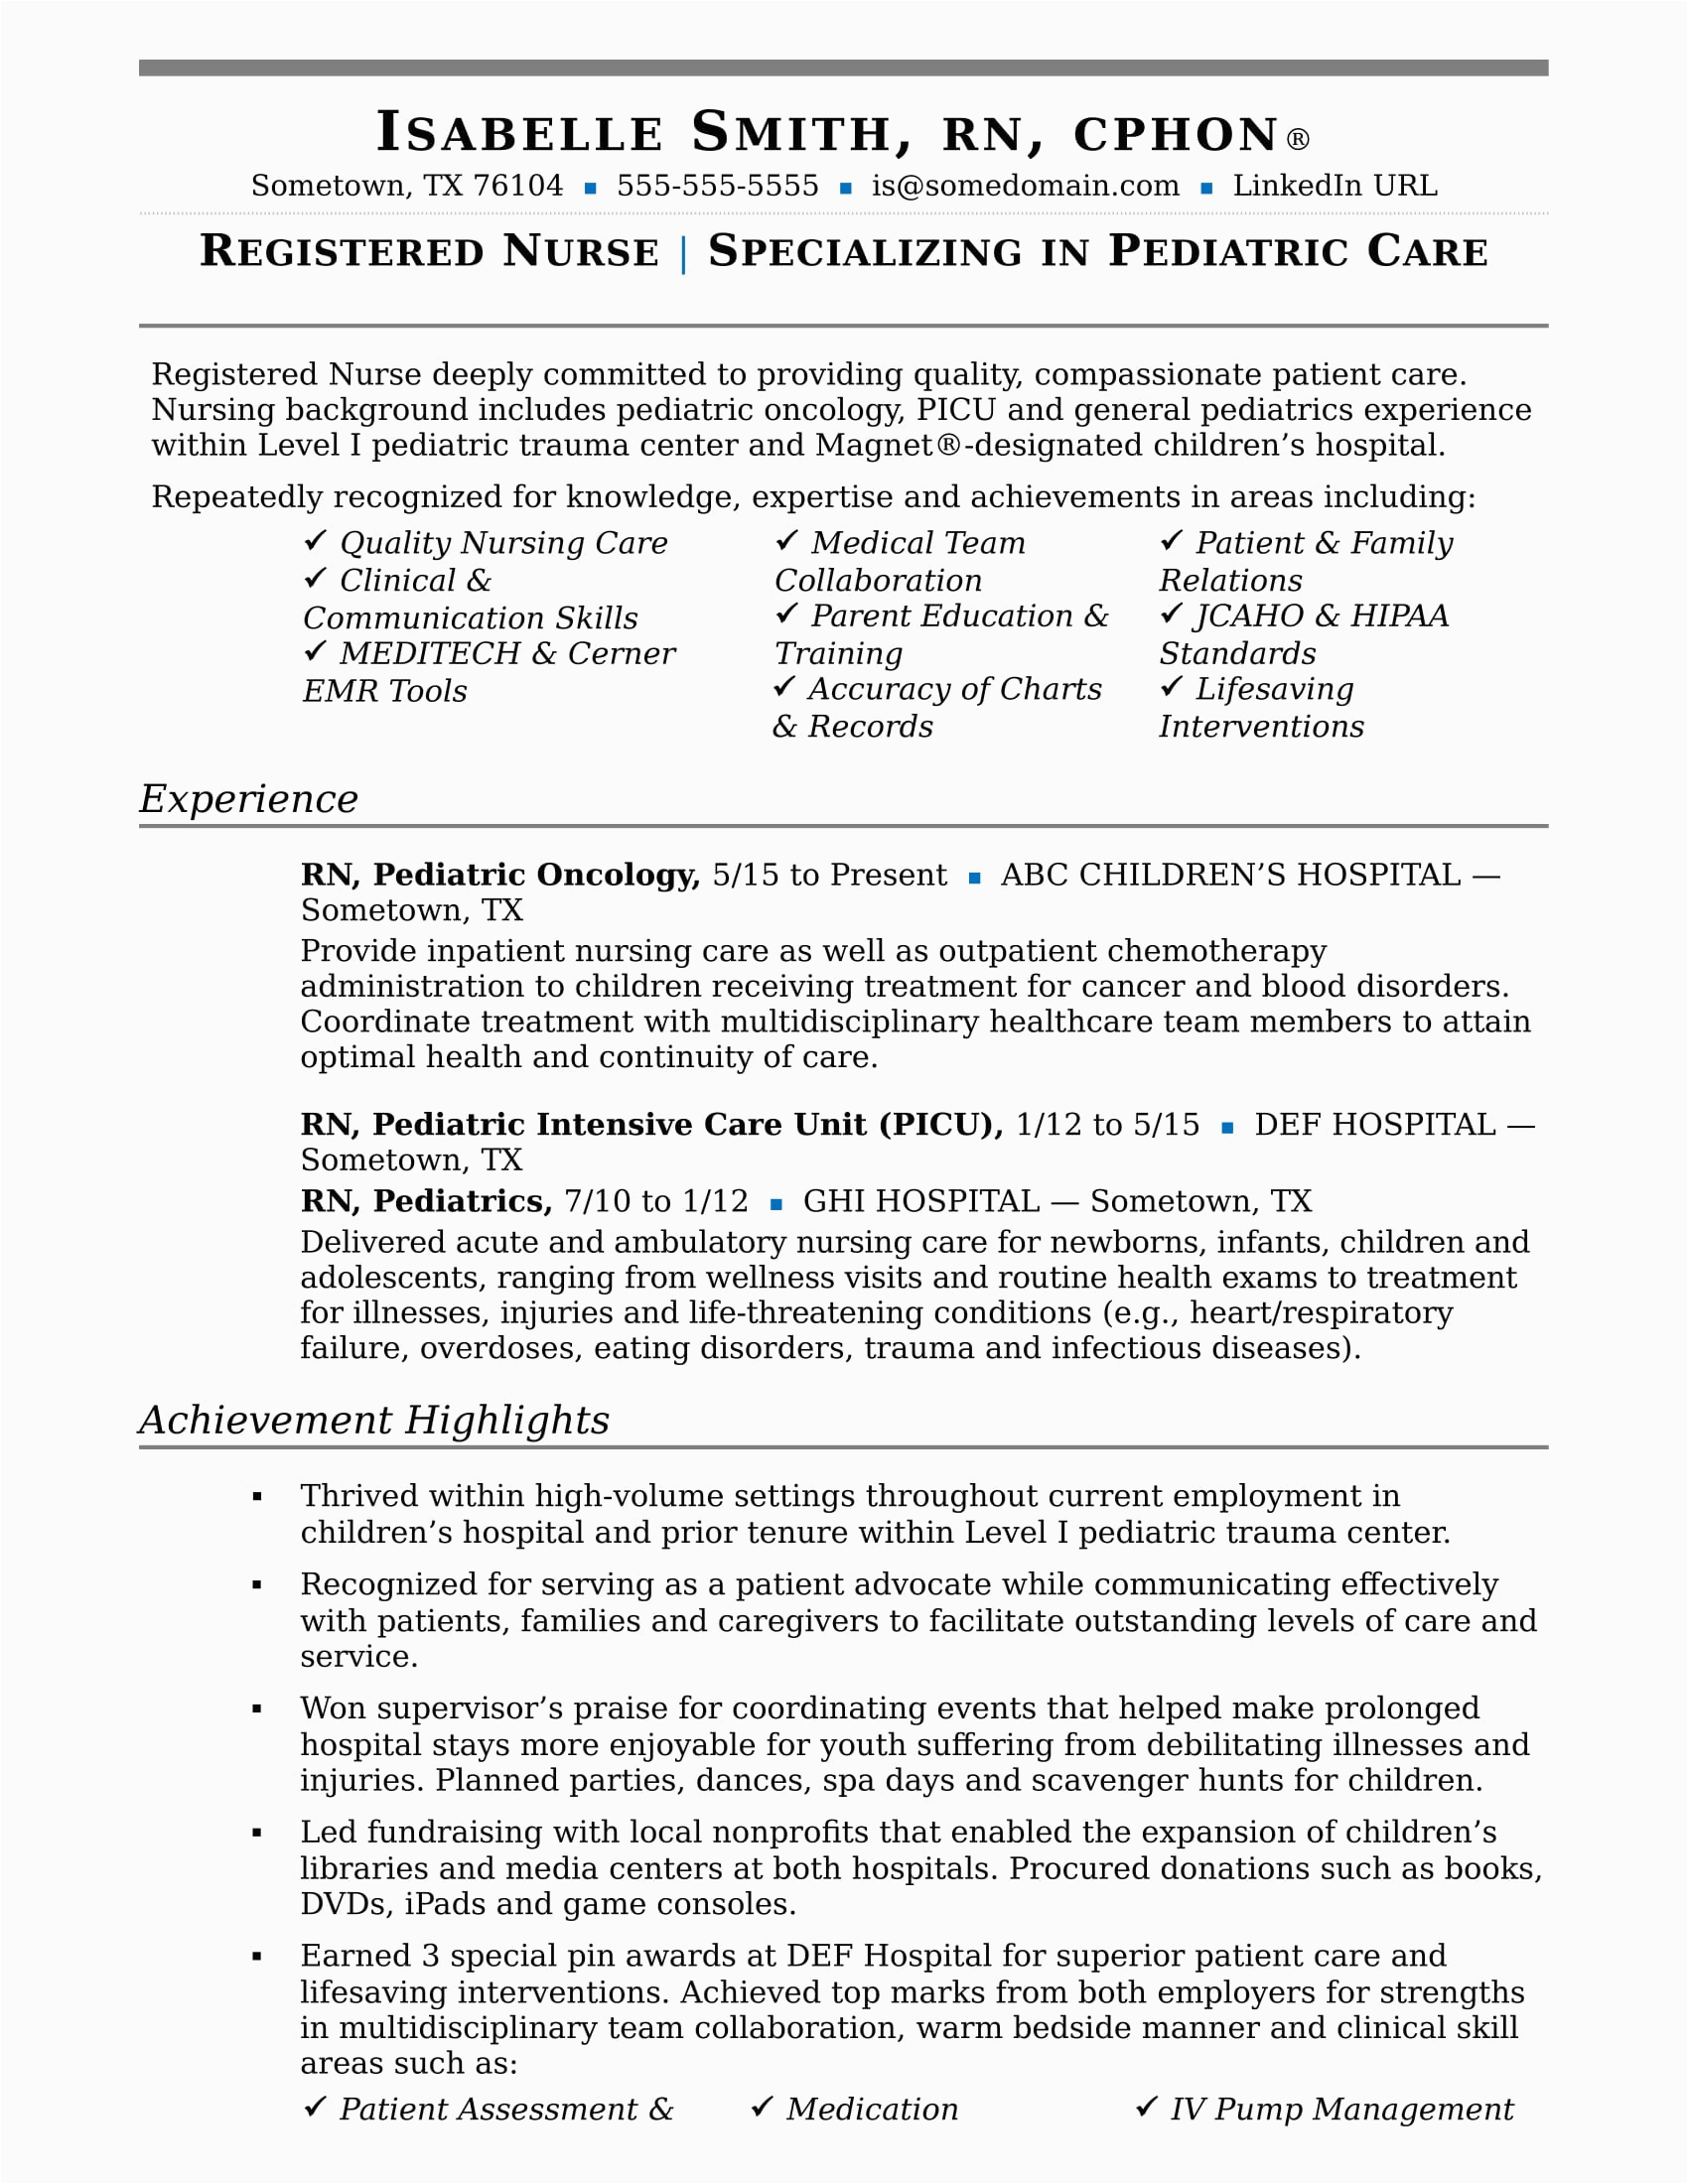 Sample Resume for Nurses with Experience Pdf Nurse Resume Sample